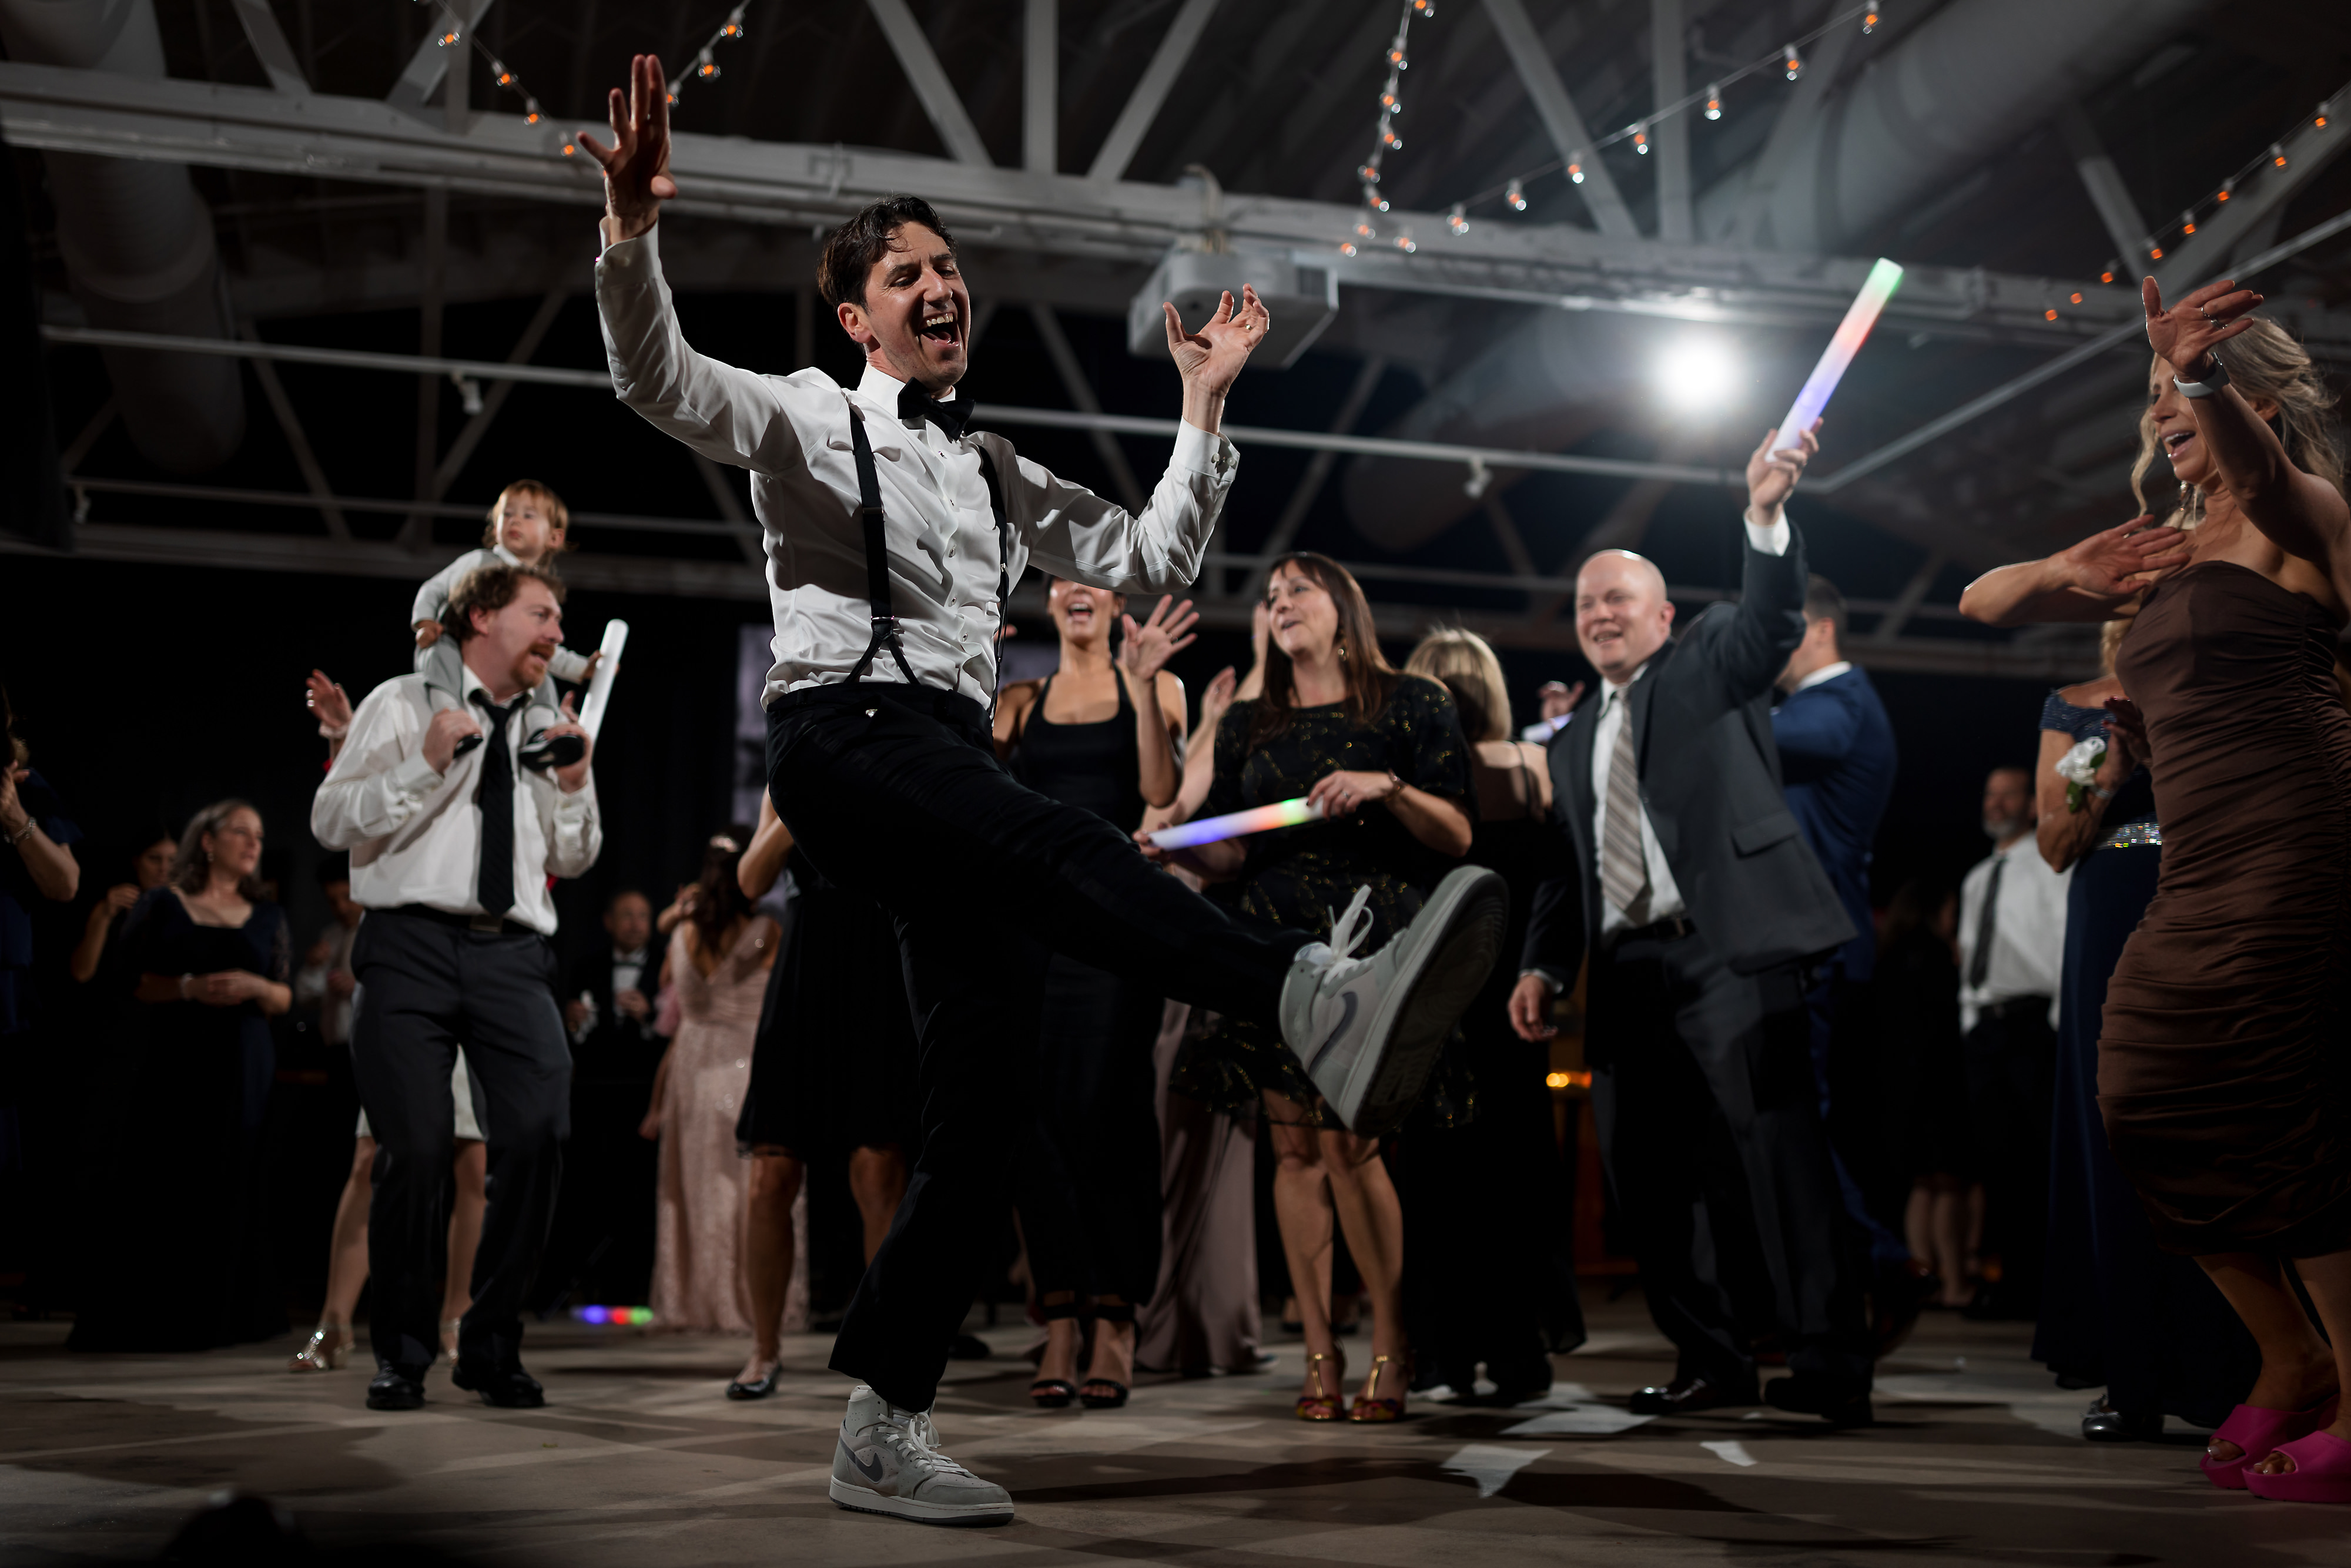 Wedding guests dance during wedding reception at Sarabande in Chicago